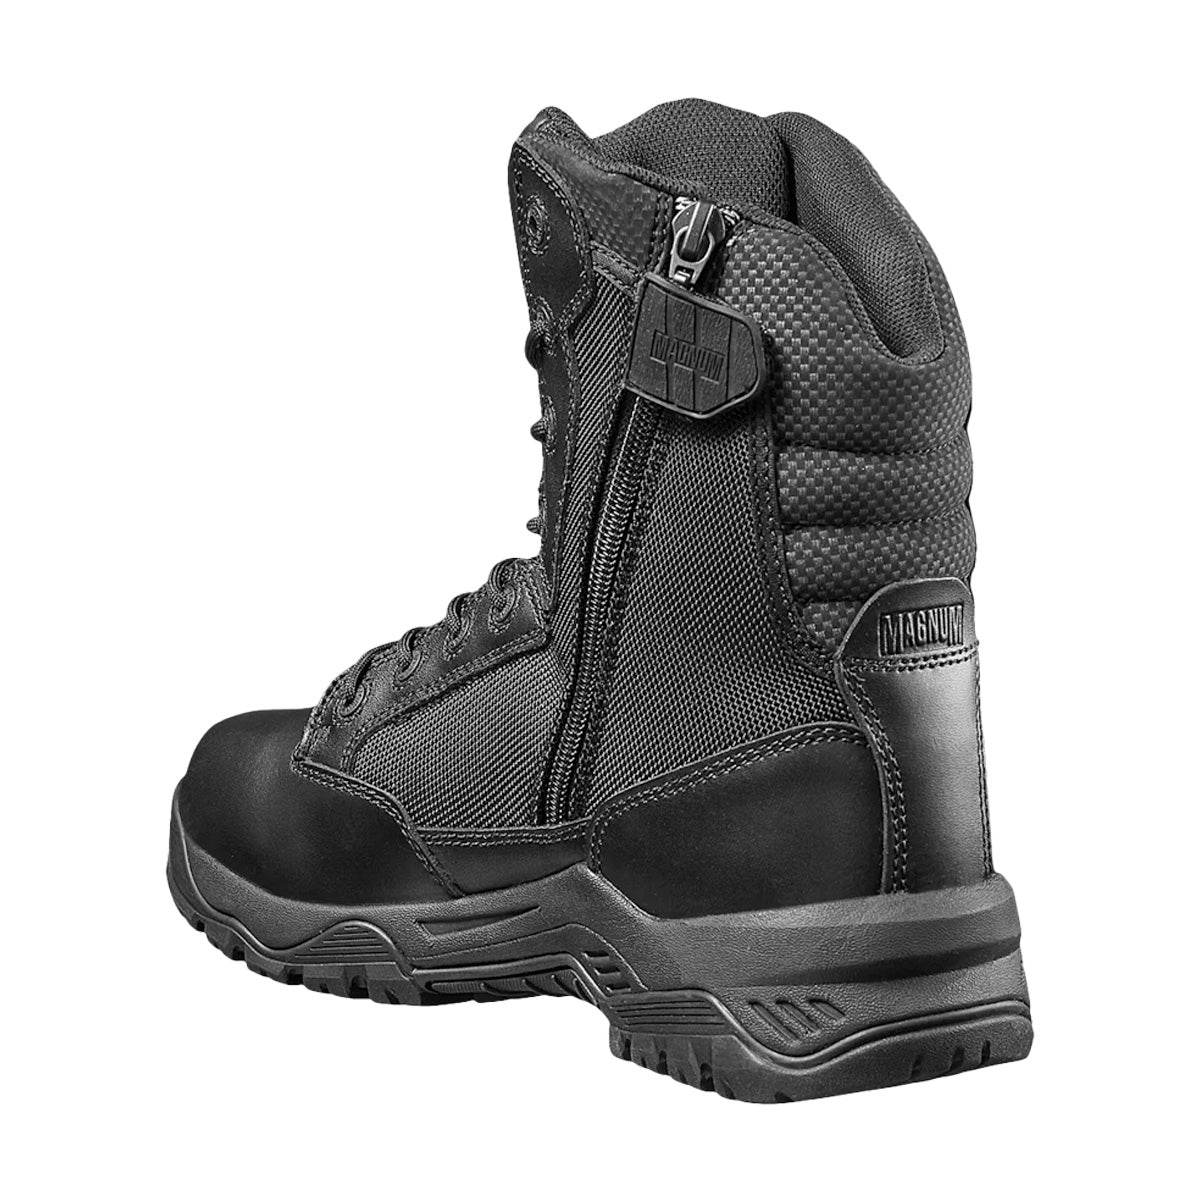 Magnum Strike Force 8.0 Side-Zip Composite Toe Boots Black Tactical Distributors Ltd New Zealand